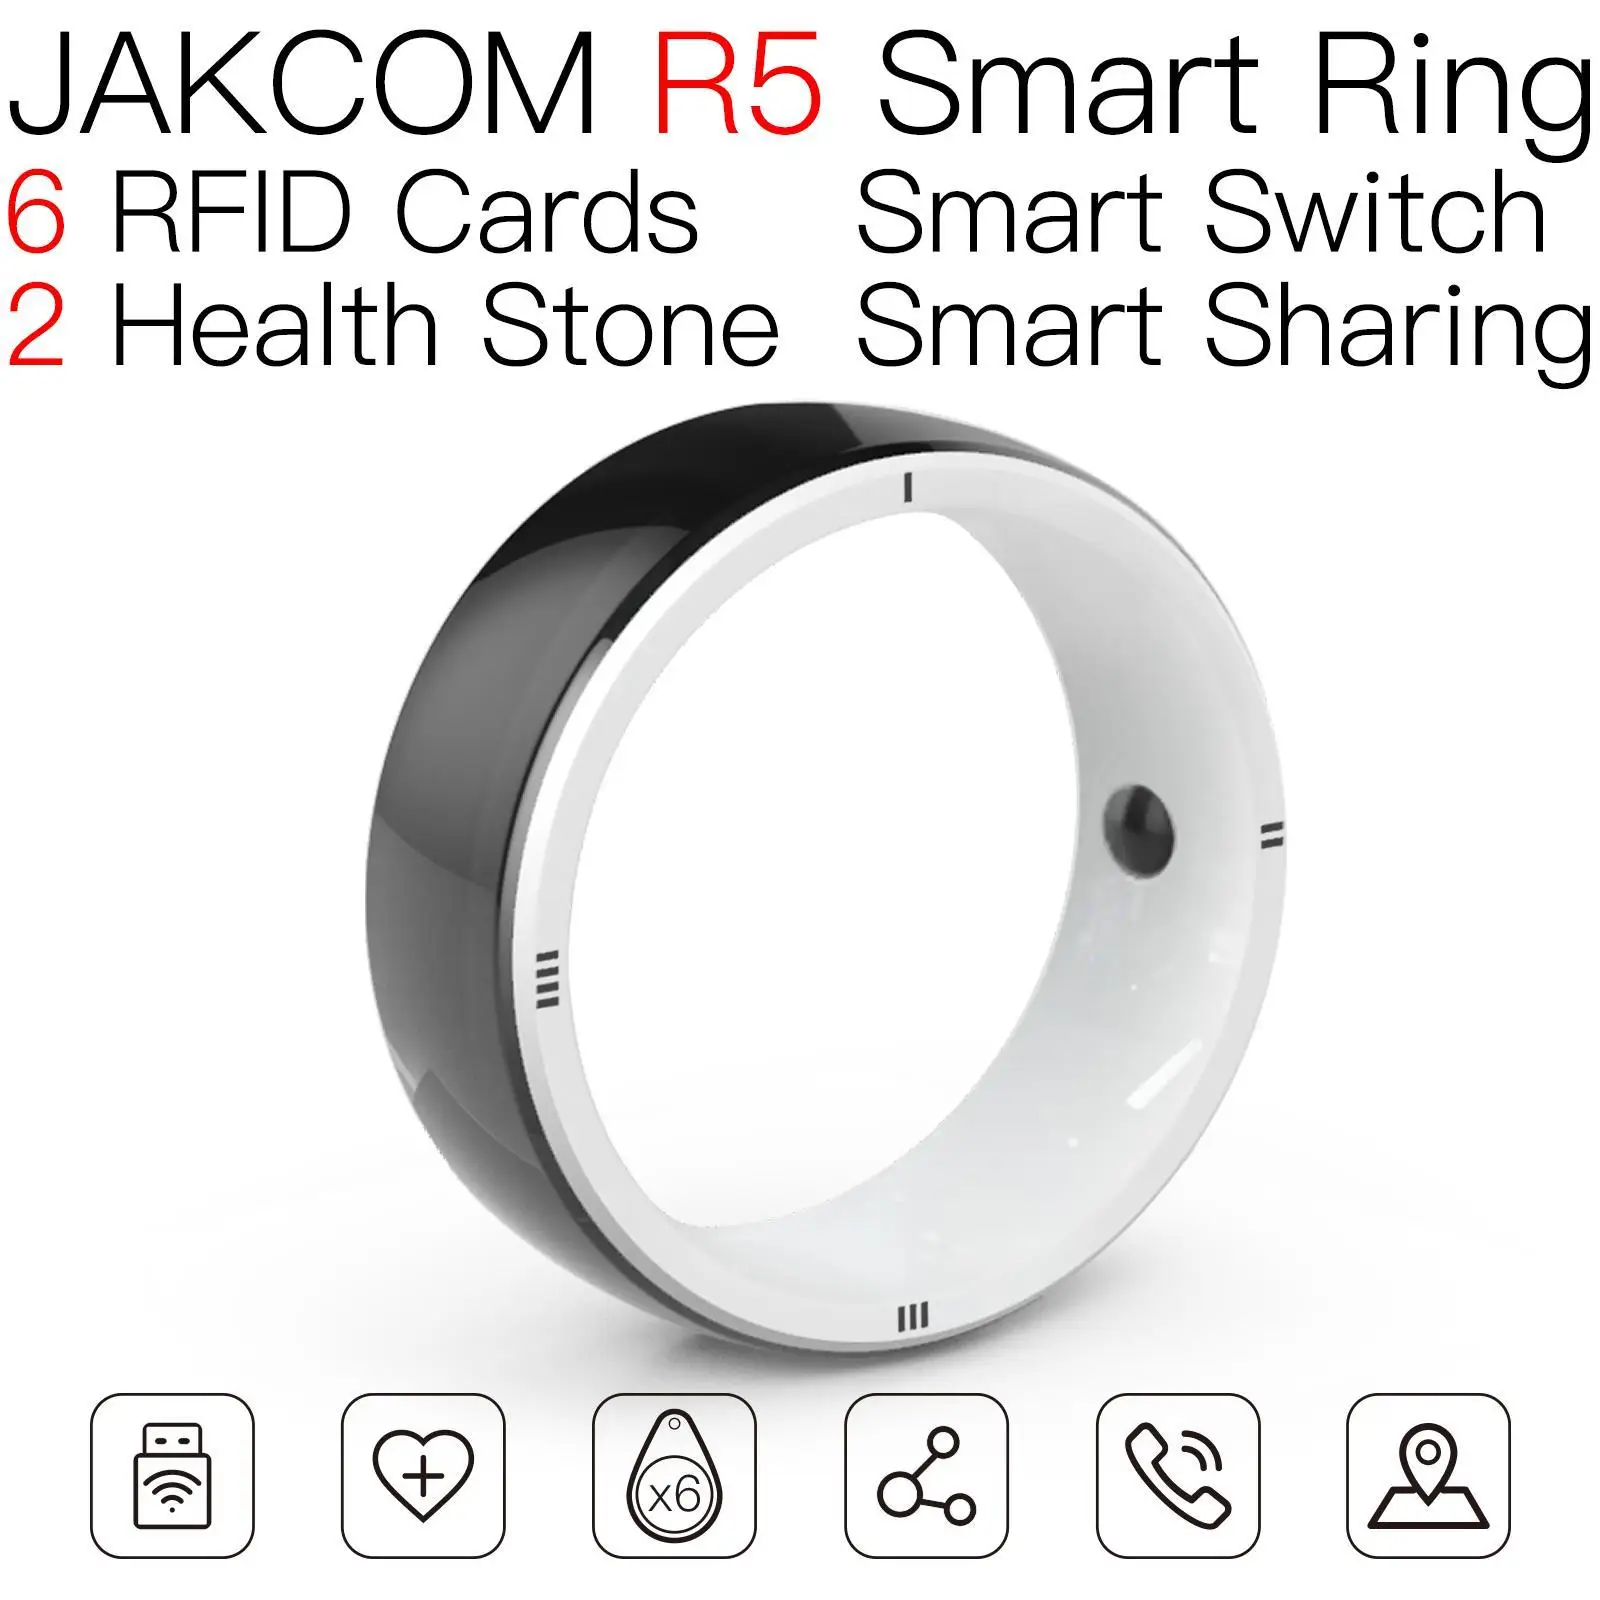 

JAKCOM R5 Smart Ring Newer than gen2 tag rfid tire dog microchip mod chip for switch read write charon baby 2 legic clone nfc